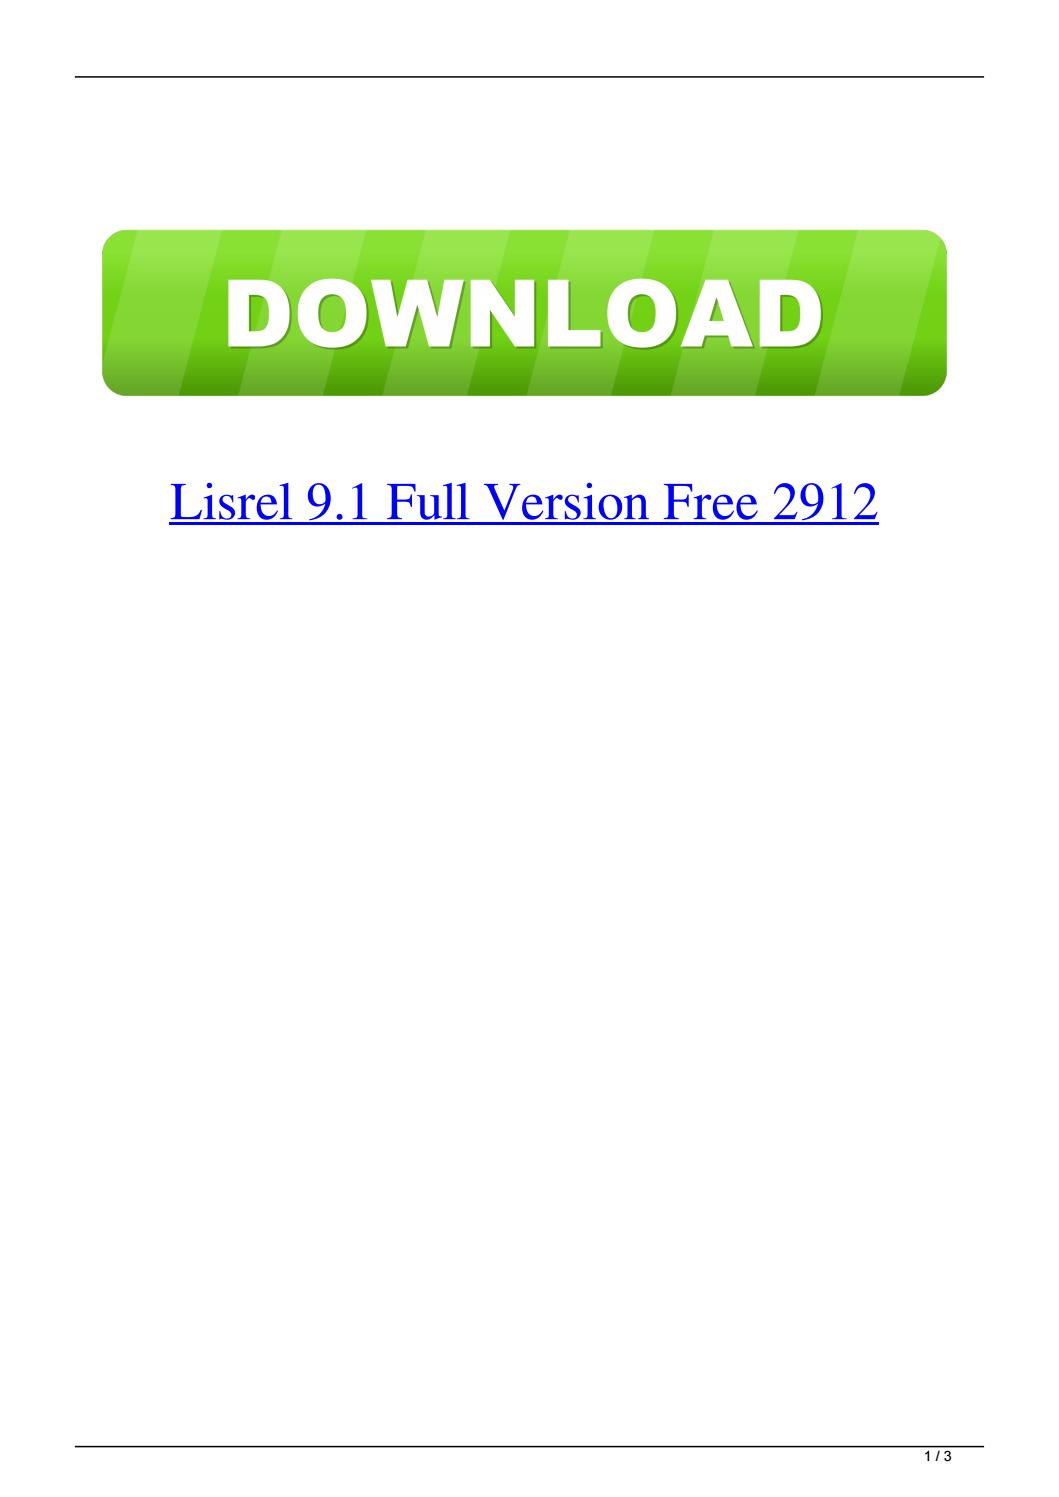 free lisrel download for students mac